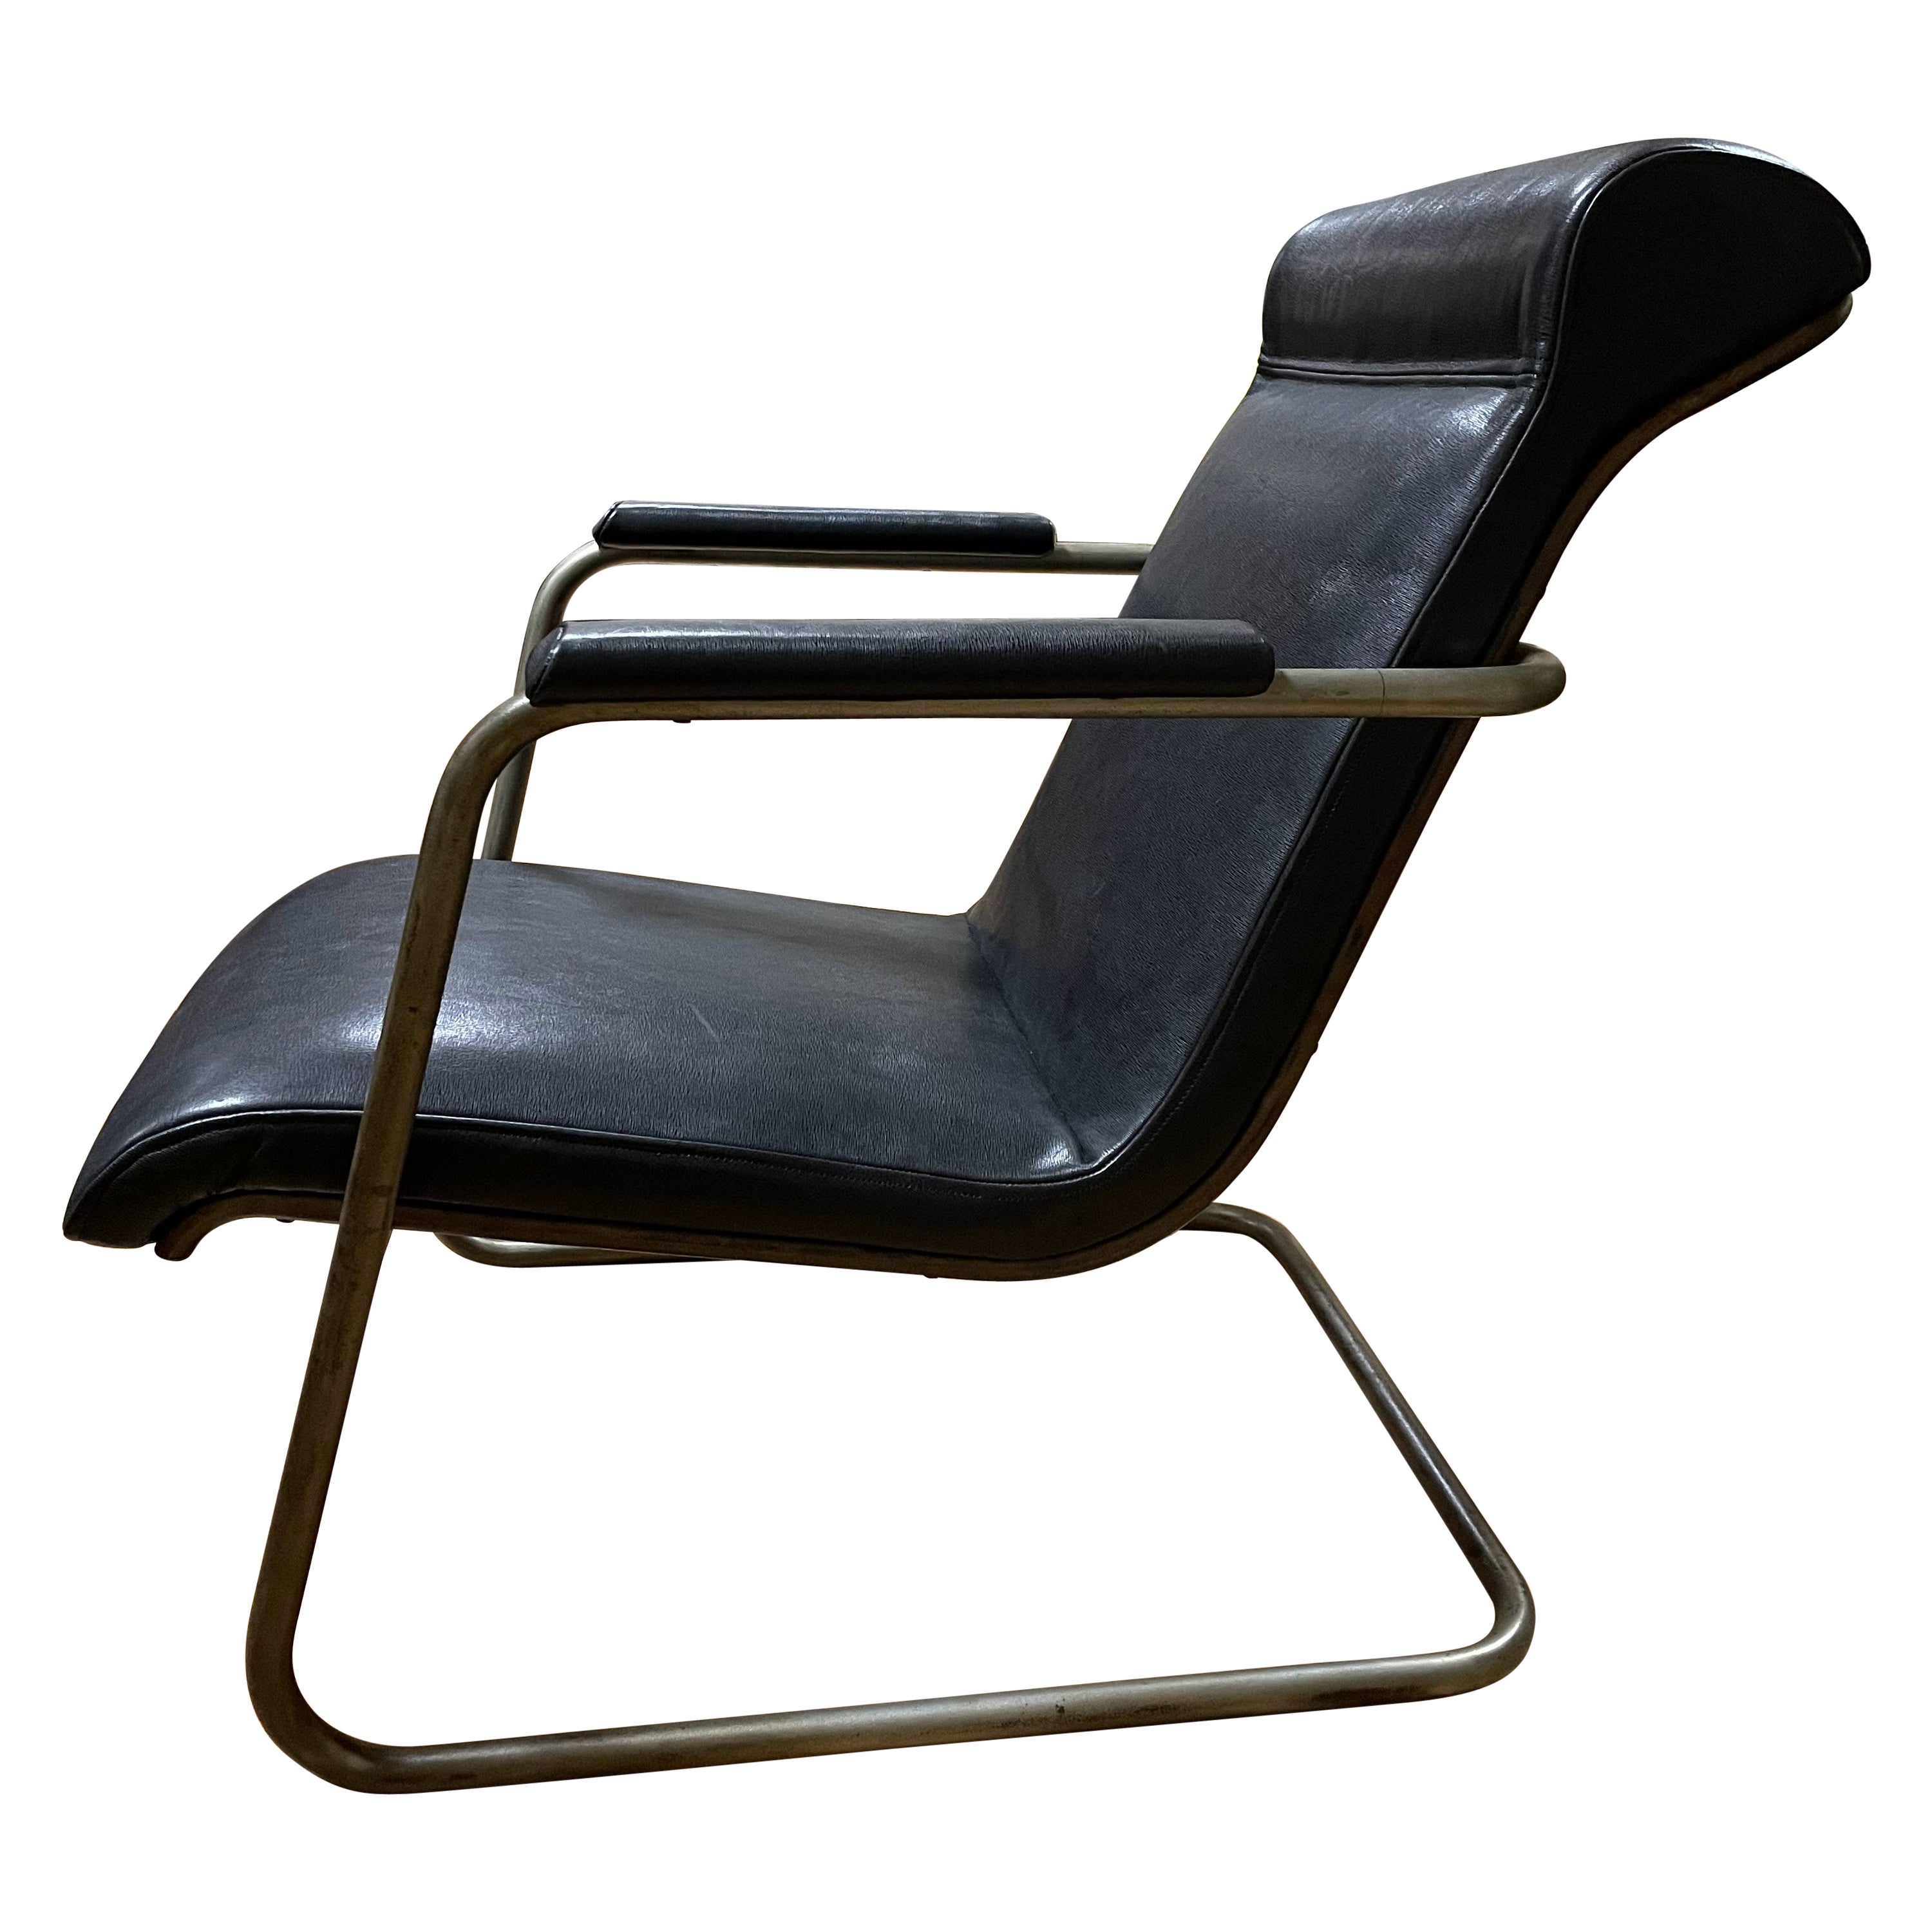 Bauhaus-Sessel, 1930er Jahre